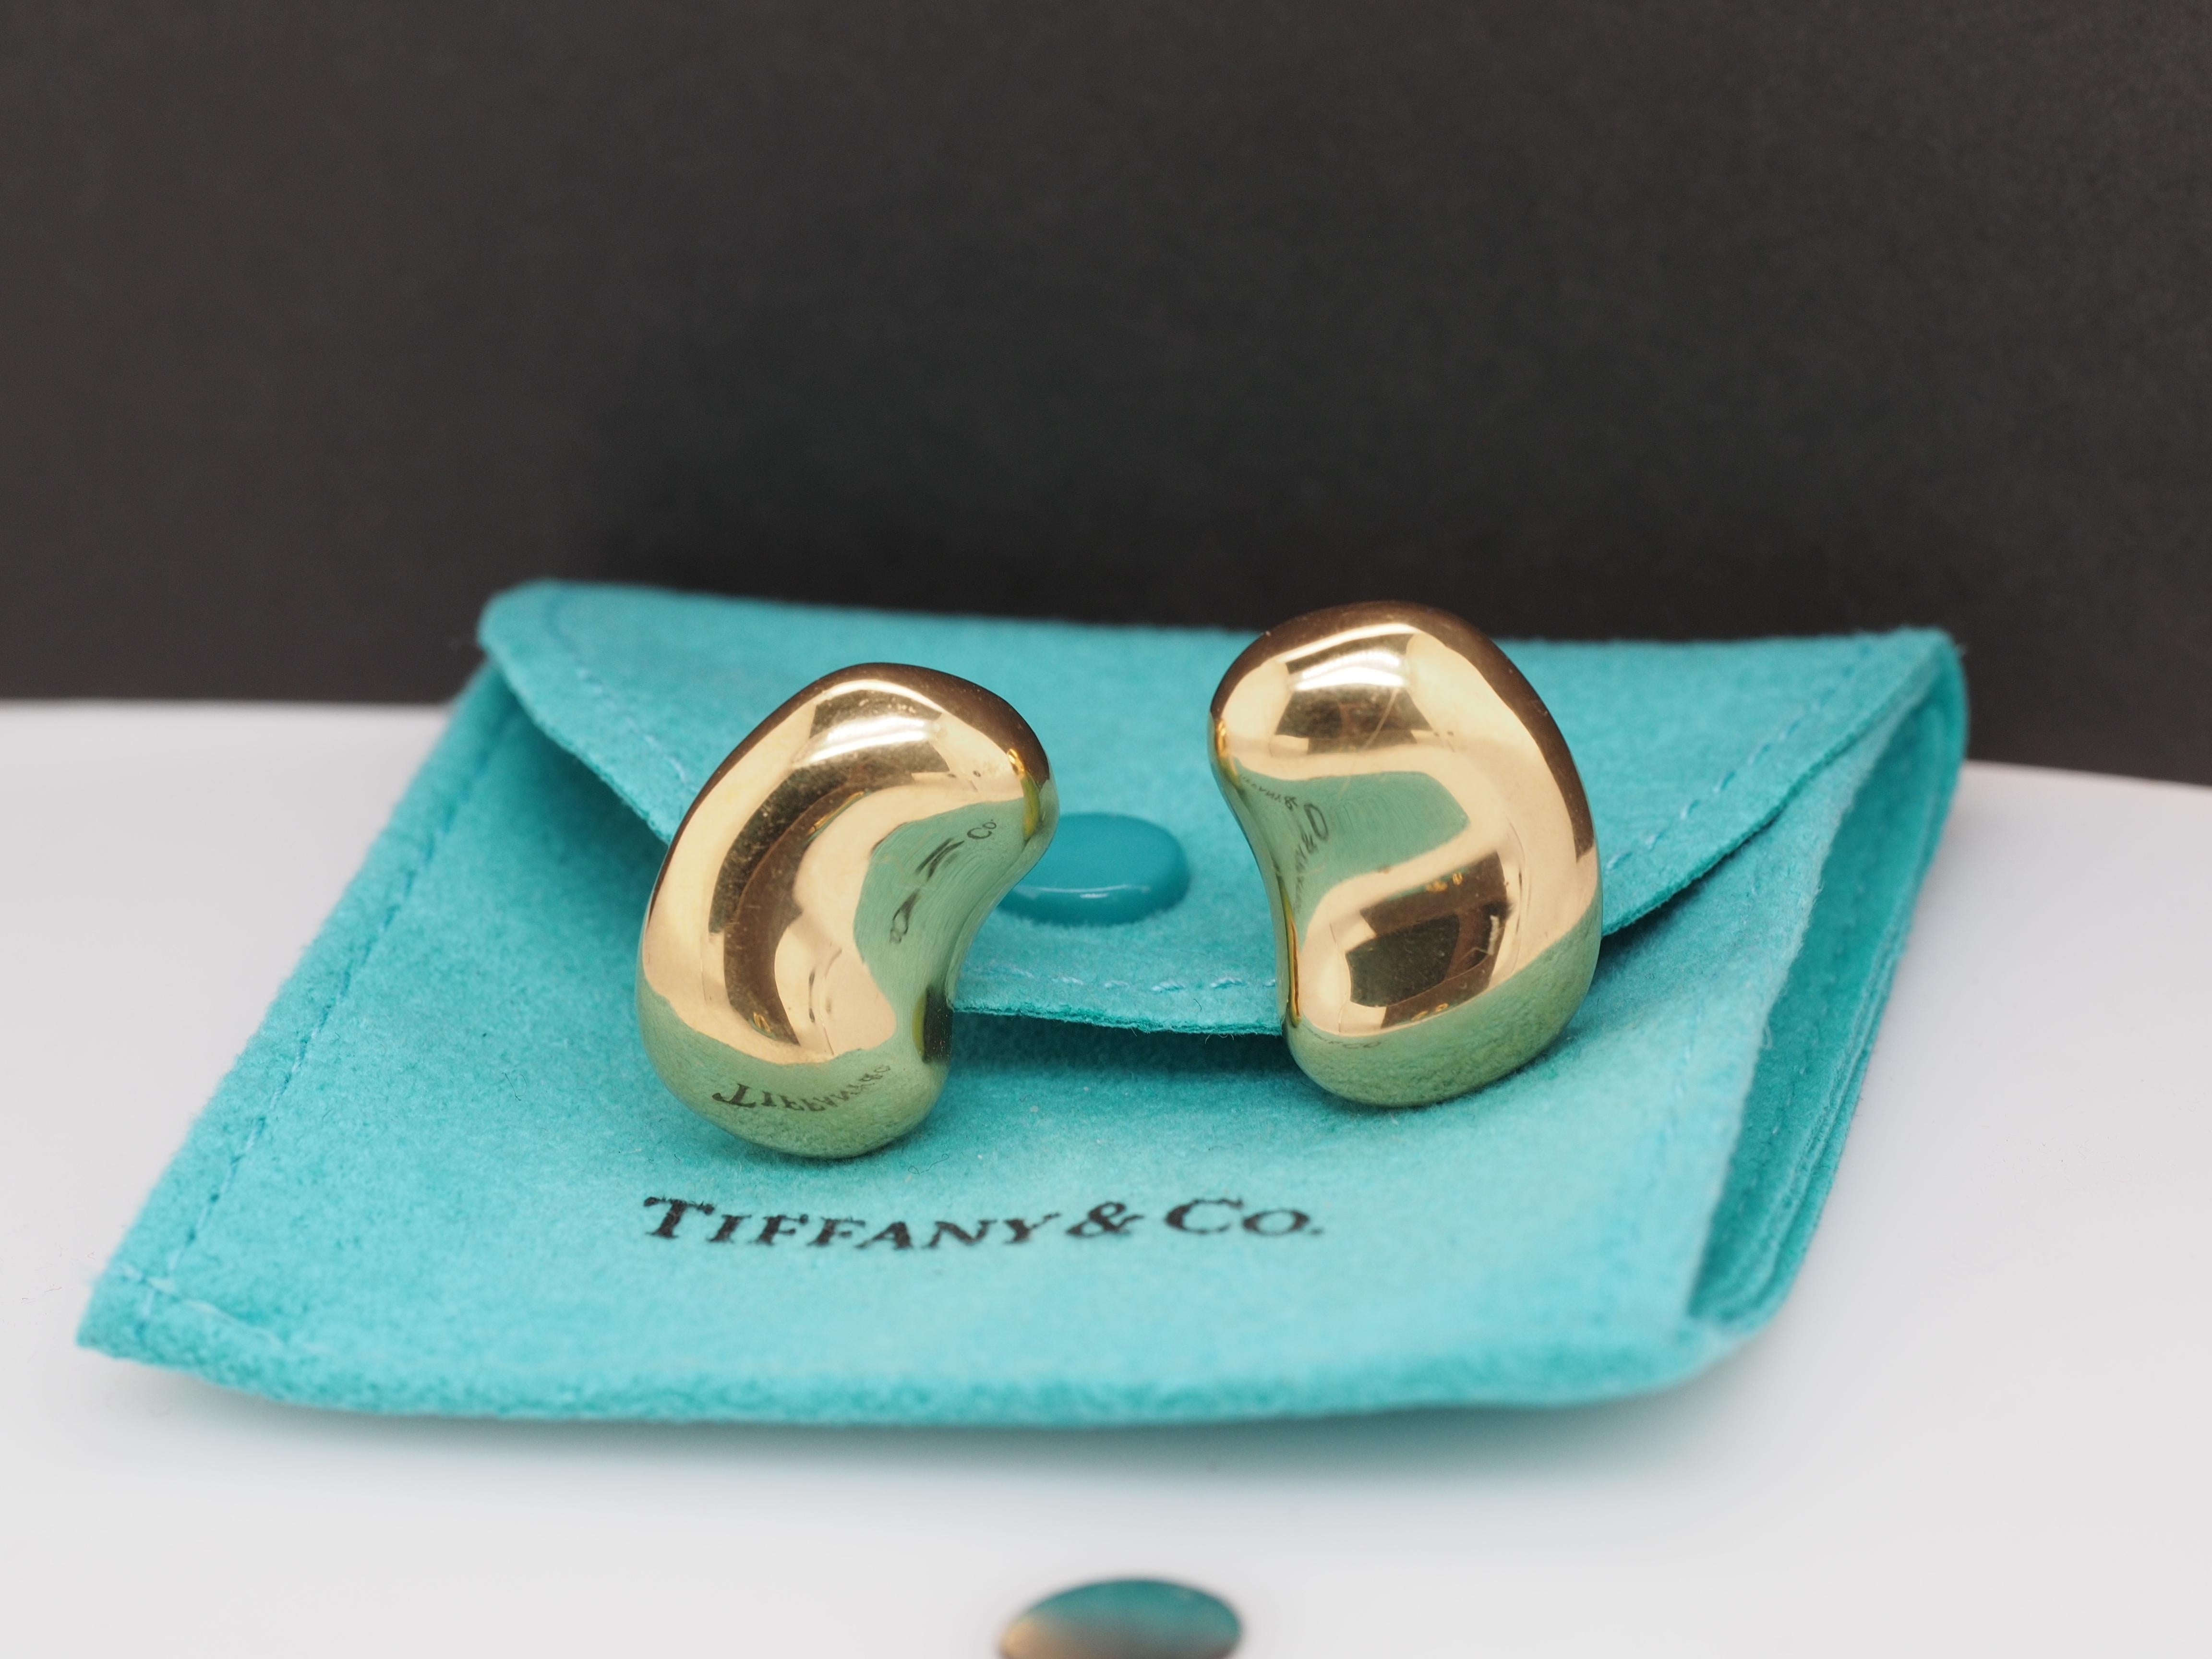 Tiffany & Co. 18K Yellow Gold JUMBO Bean Earrings by Elsa Peretti In Good Condition For Sale In Atlanta, GA